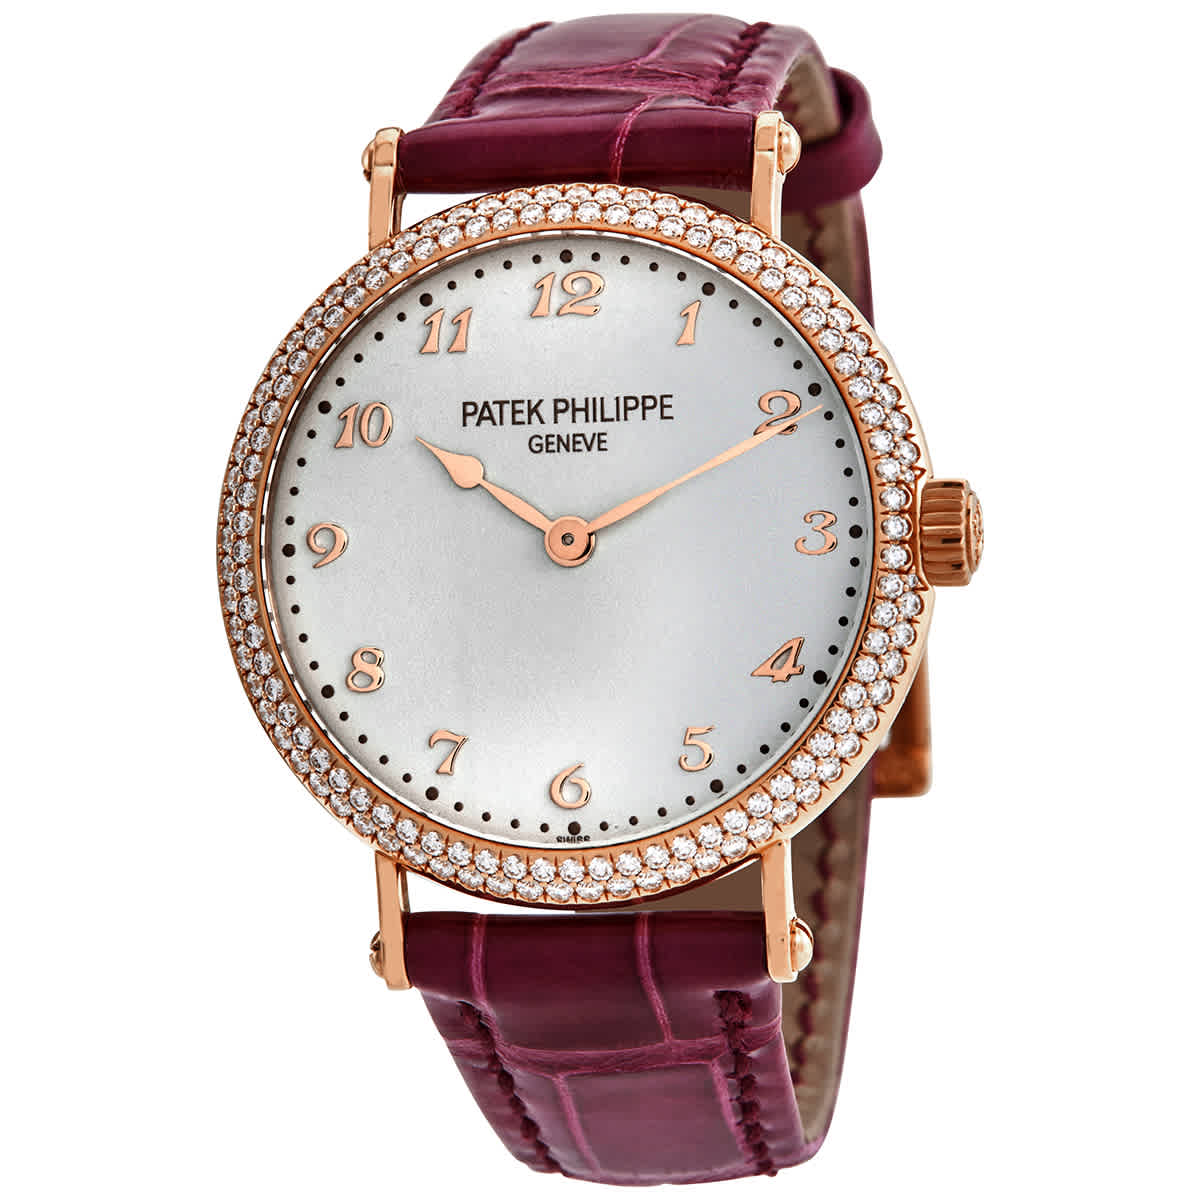 Patek Philippe Calatrava Automatic Diamond Ladies Watch 7200-200r-001 In Gold / Gold Tone / Purple / Rose / Rose Gold / Rose Gold Tone / Silver